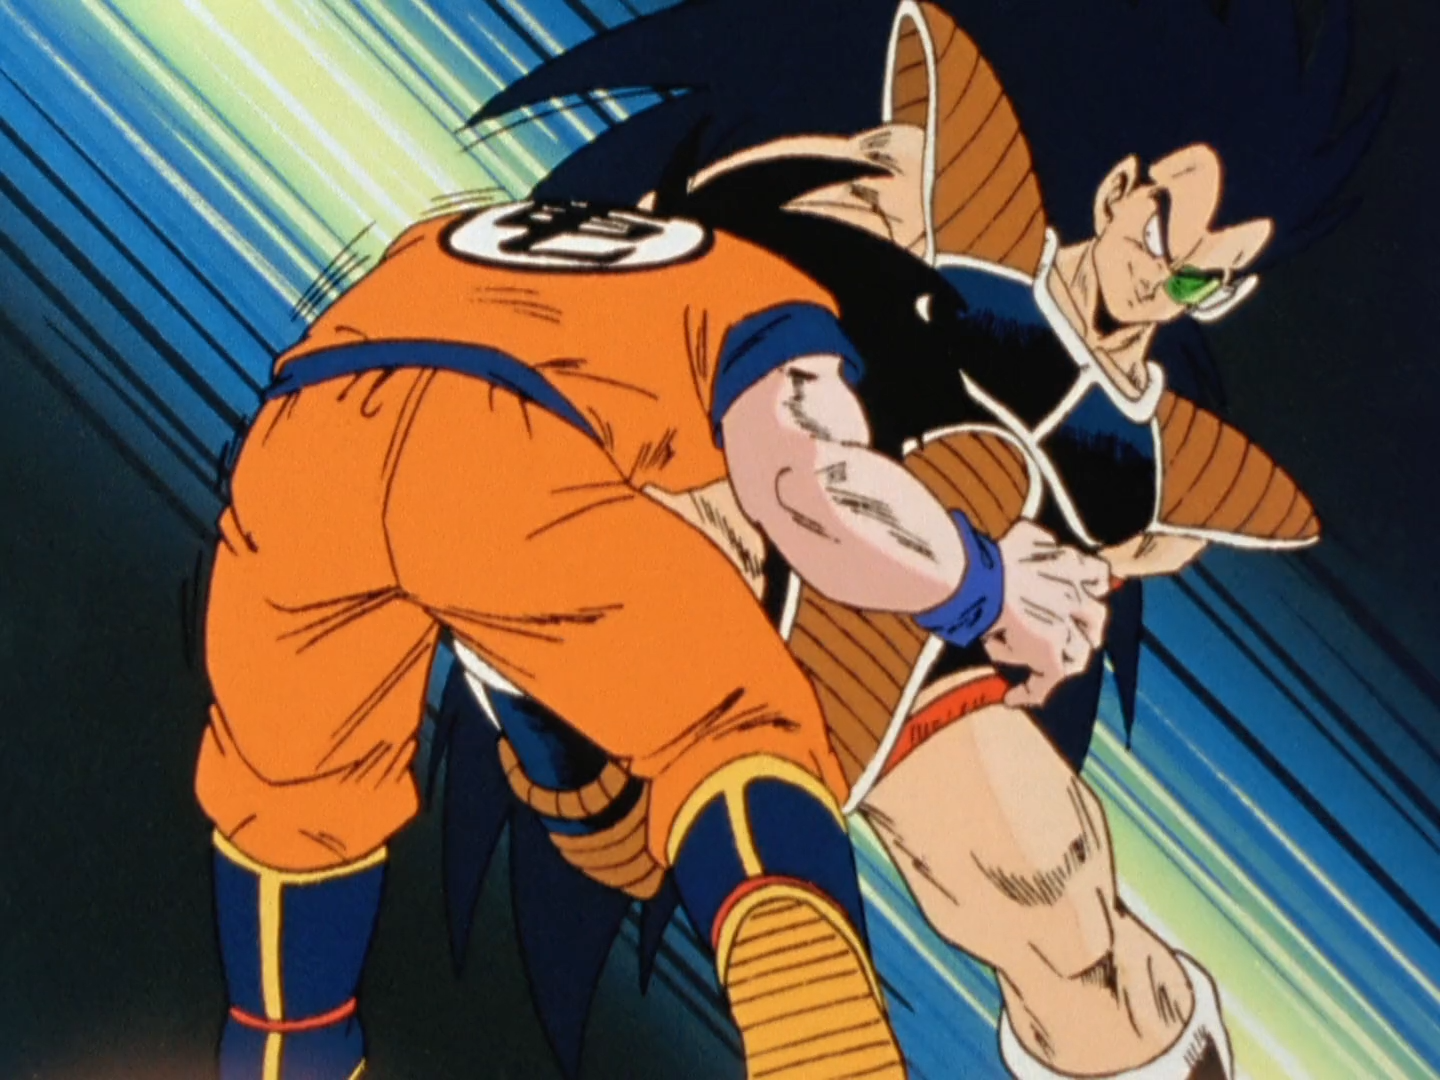 Is Raditz really Goku's brother? - Quora